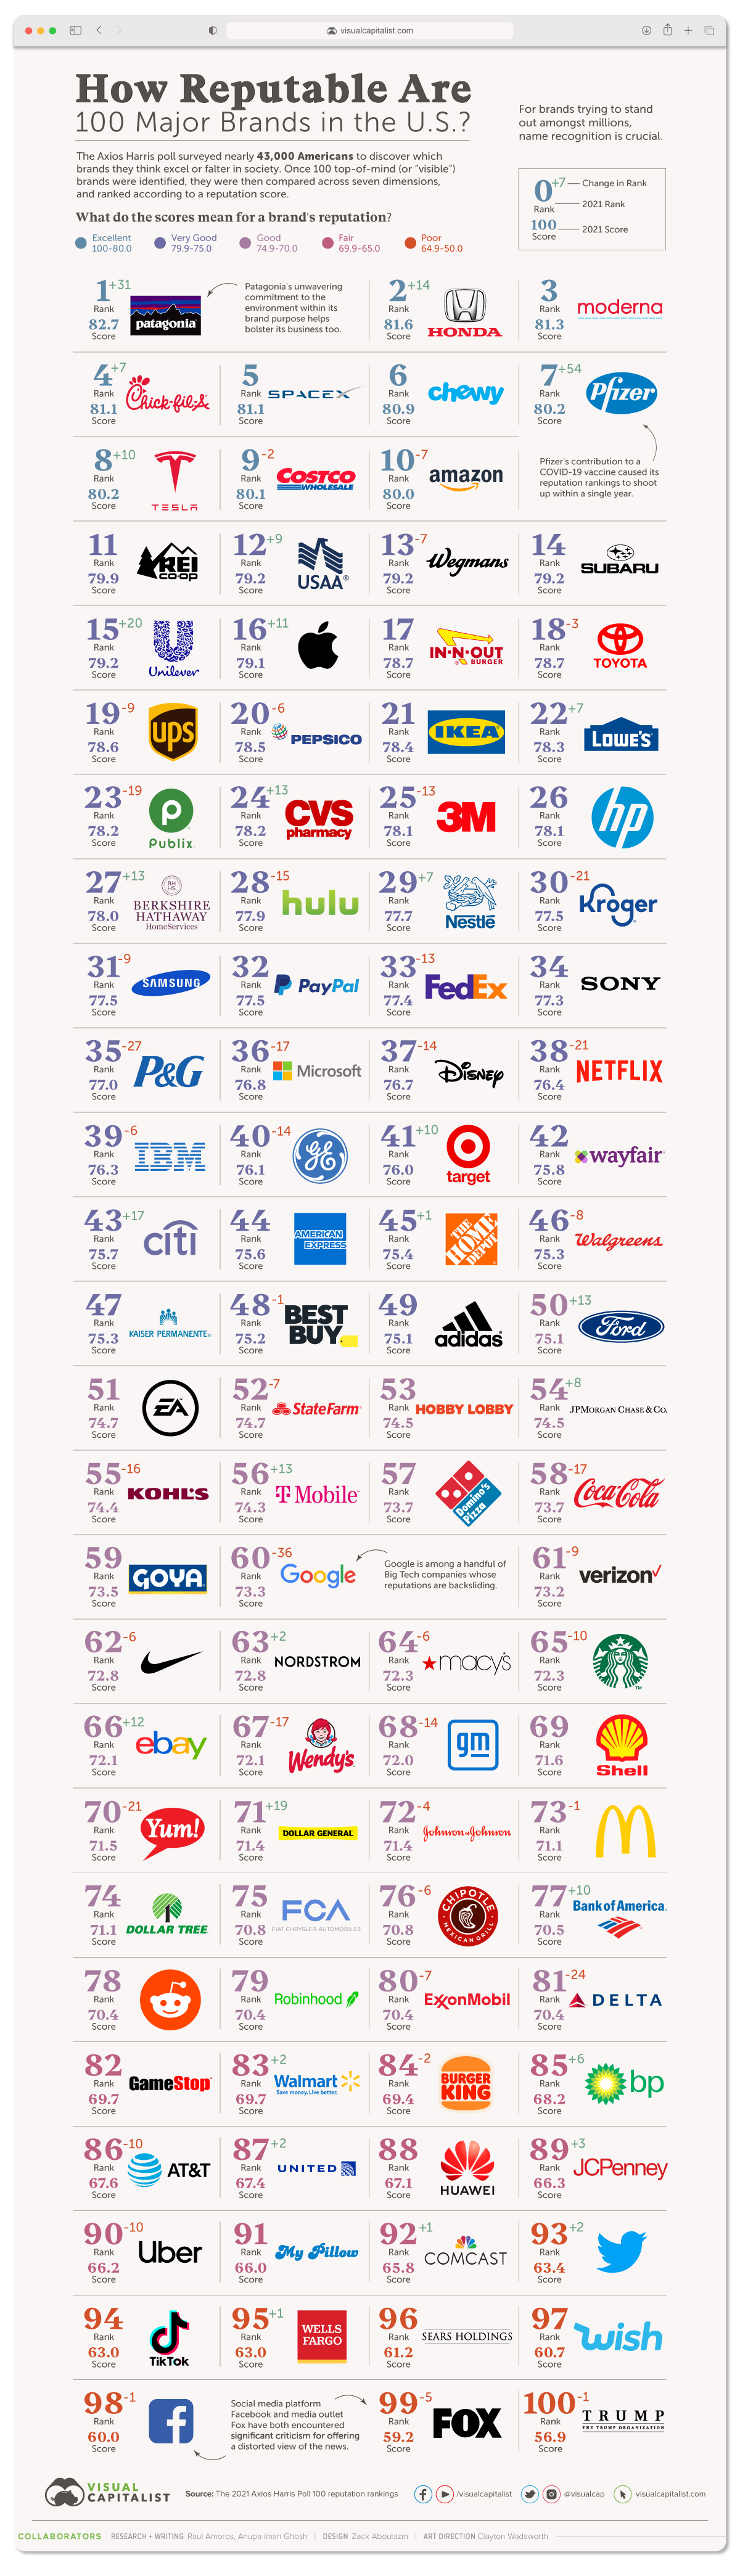 Engager kapsel metrisk Ranked: The Reputation of 100 Major Brands in the U.S.